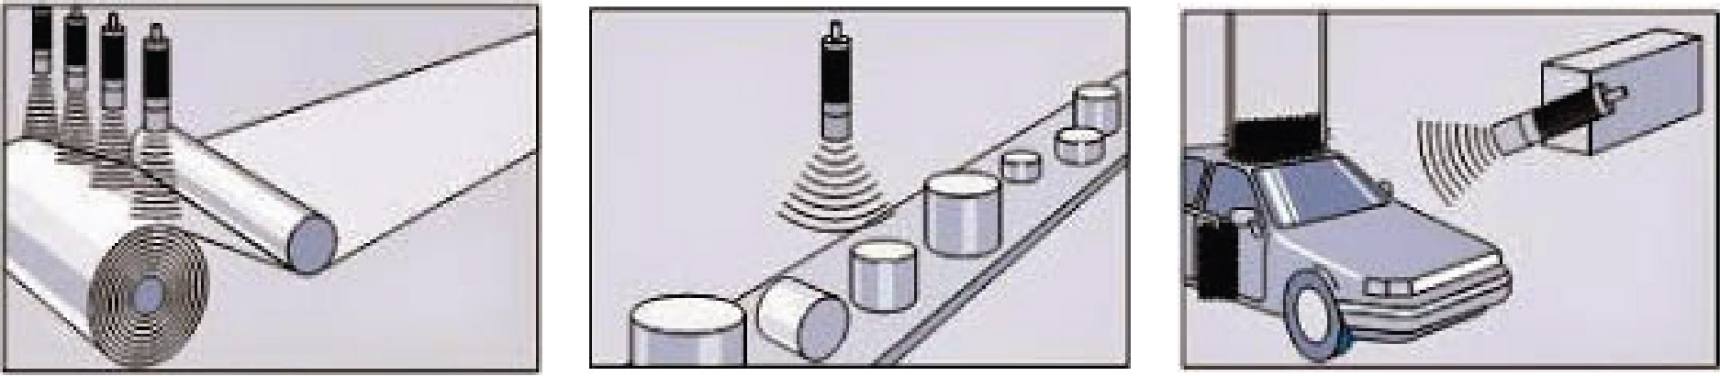 Wire Breakage Monitoring 5cm Blind Spot Reflective Structure Design Industrial Ultrasonic Level Sensor